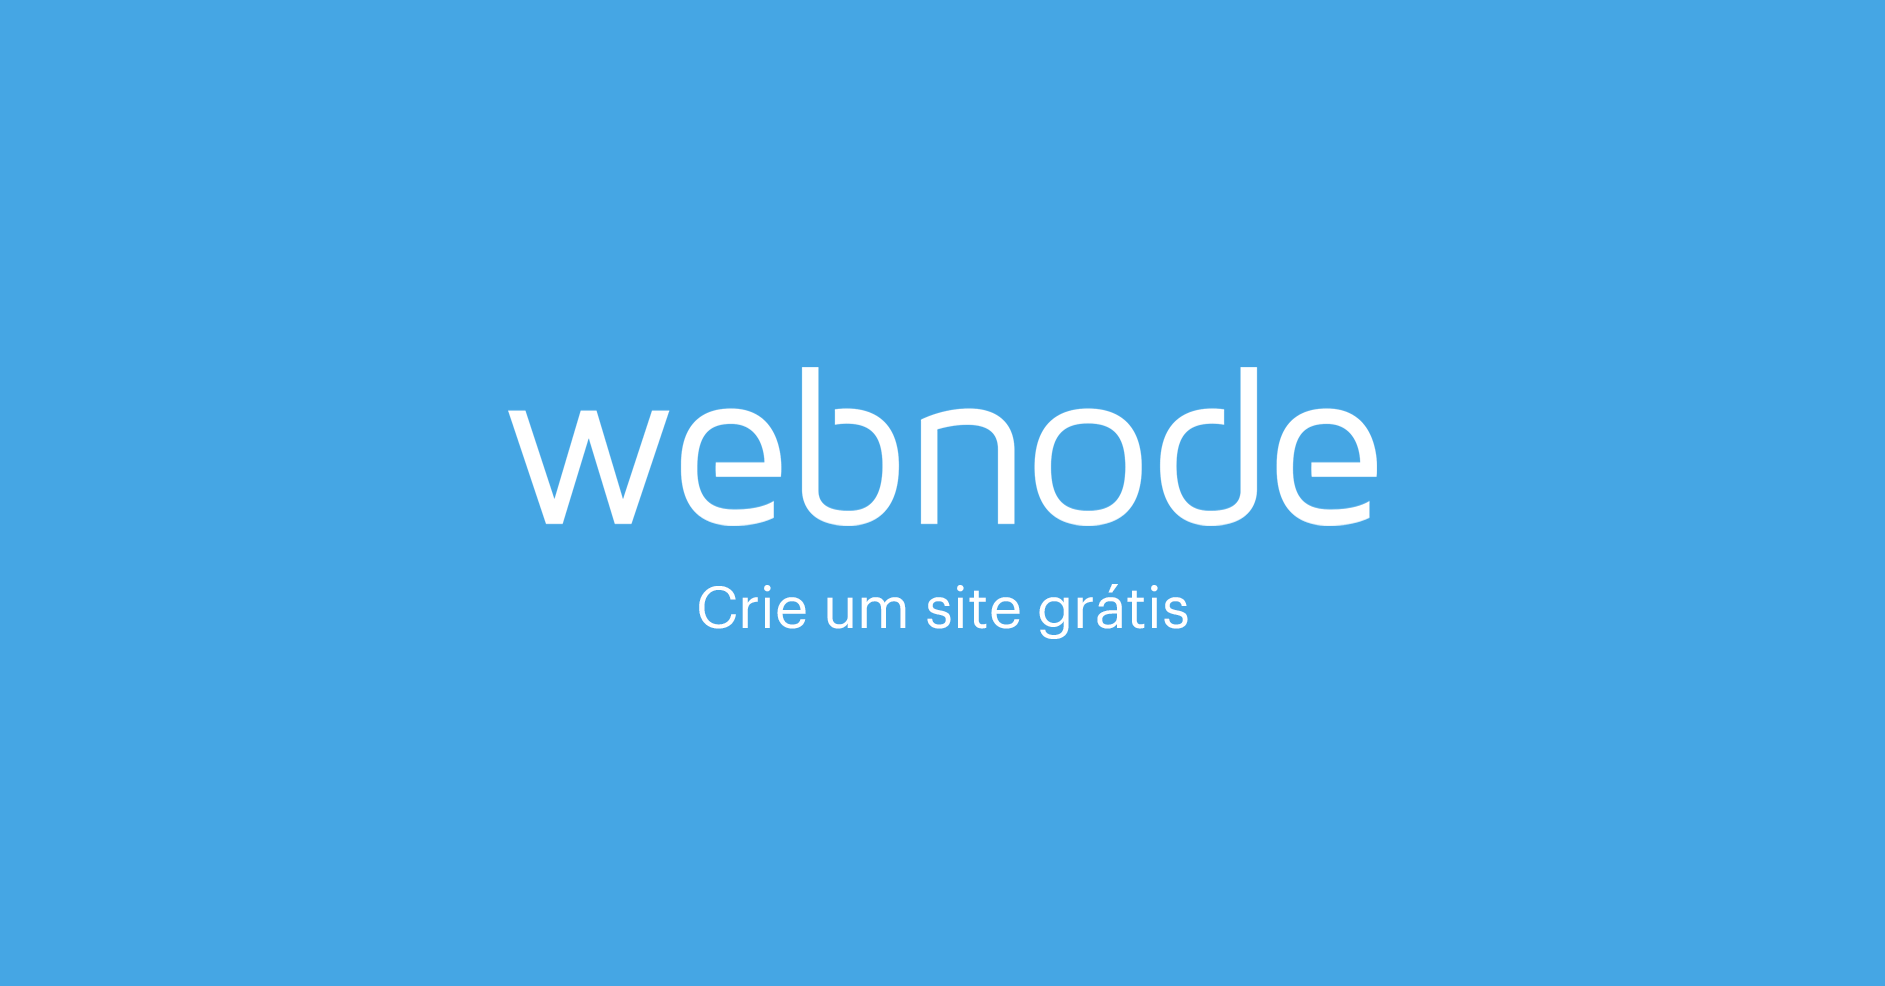 (c) Webnode.com.br